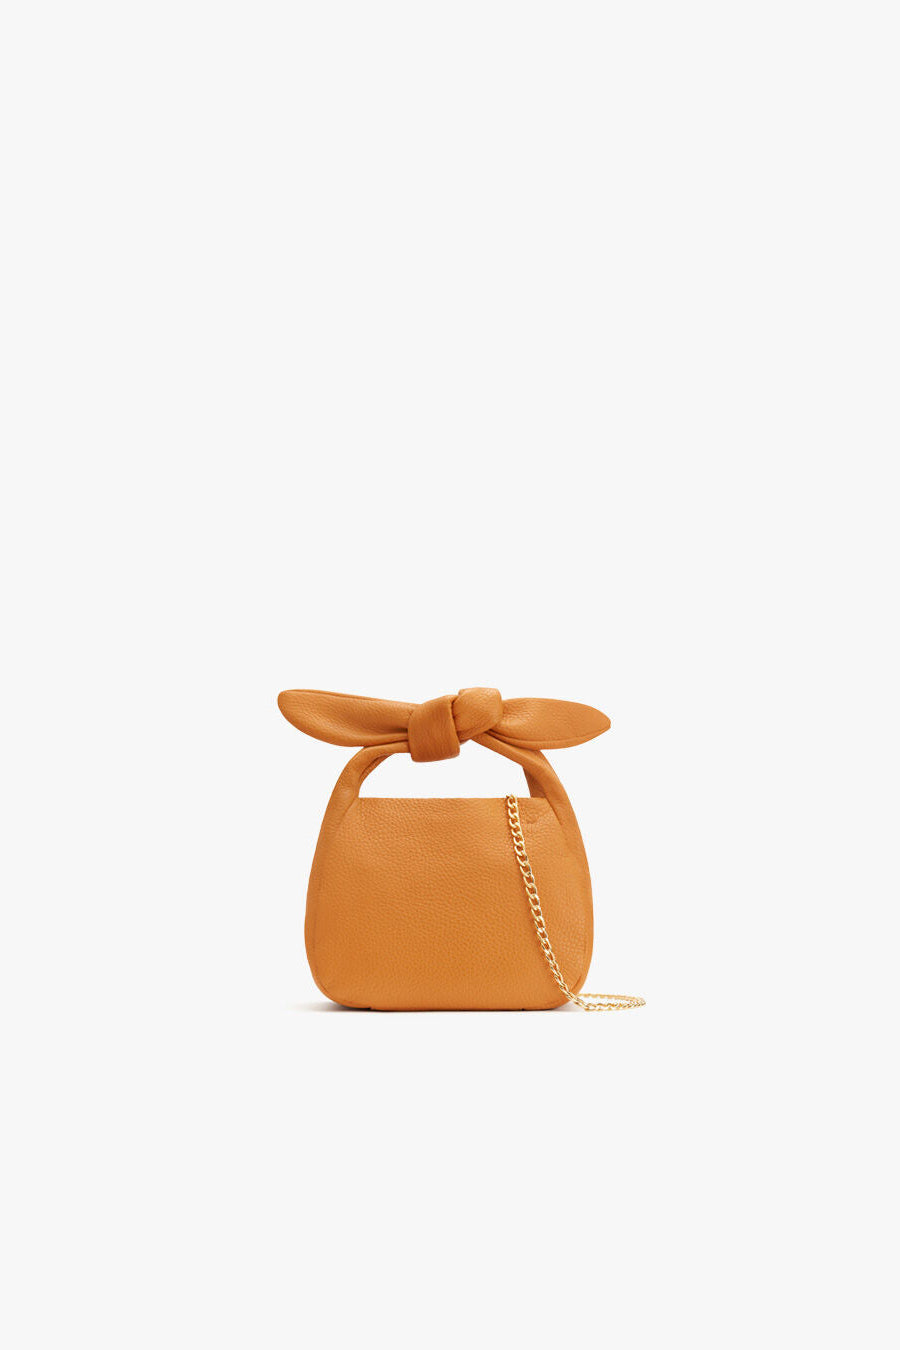 Cuyana + Mini Bow Bag